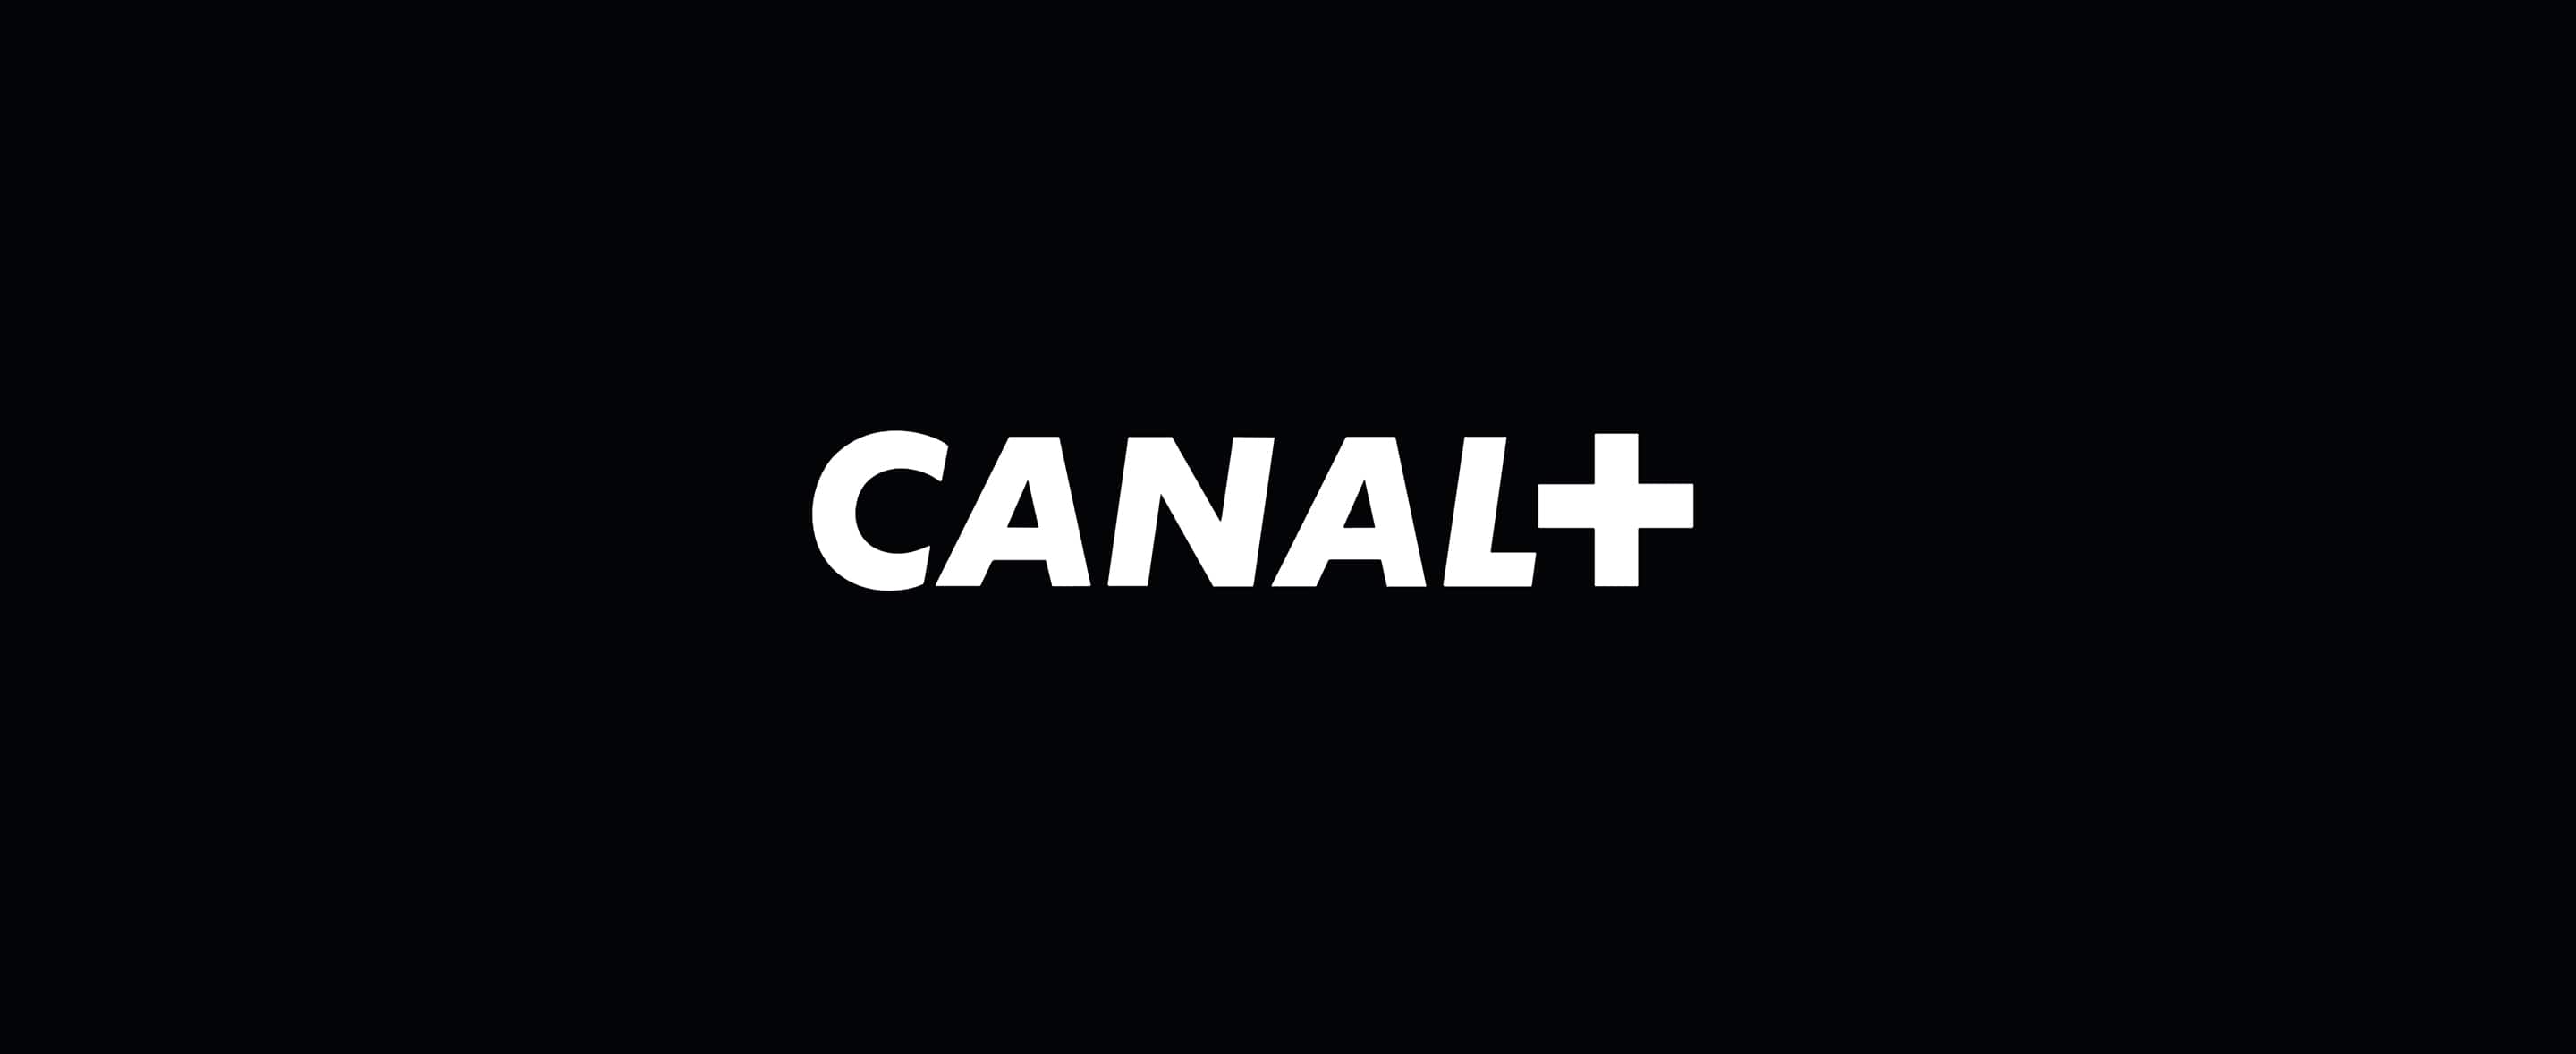 st-canal-banner.jpg